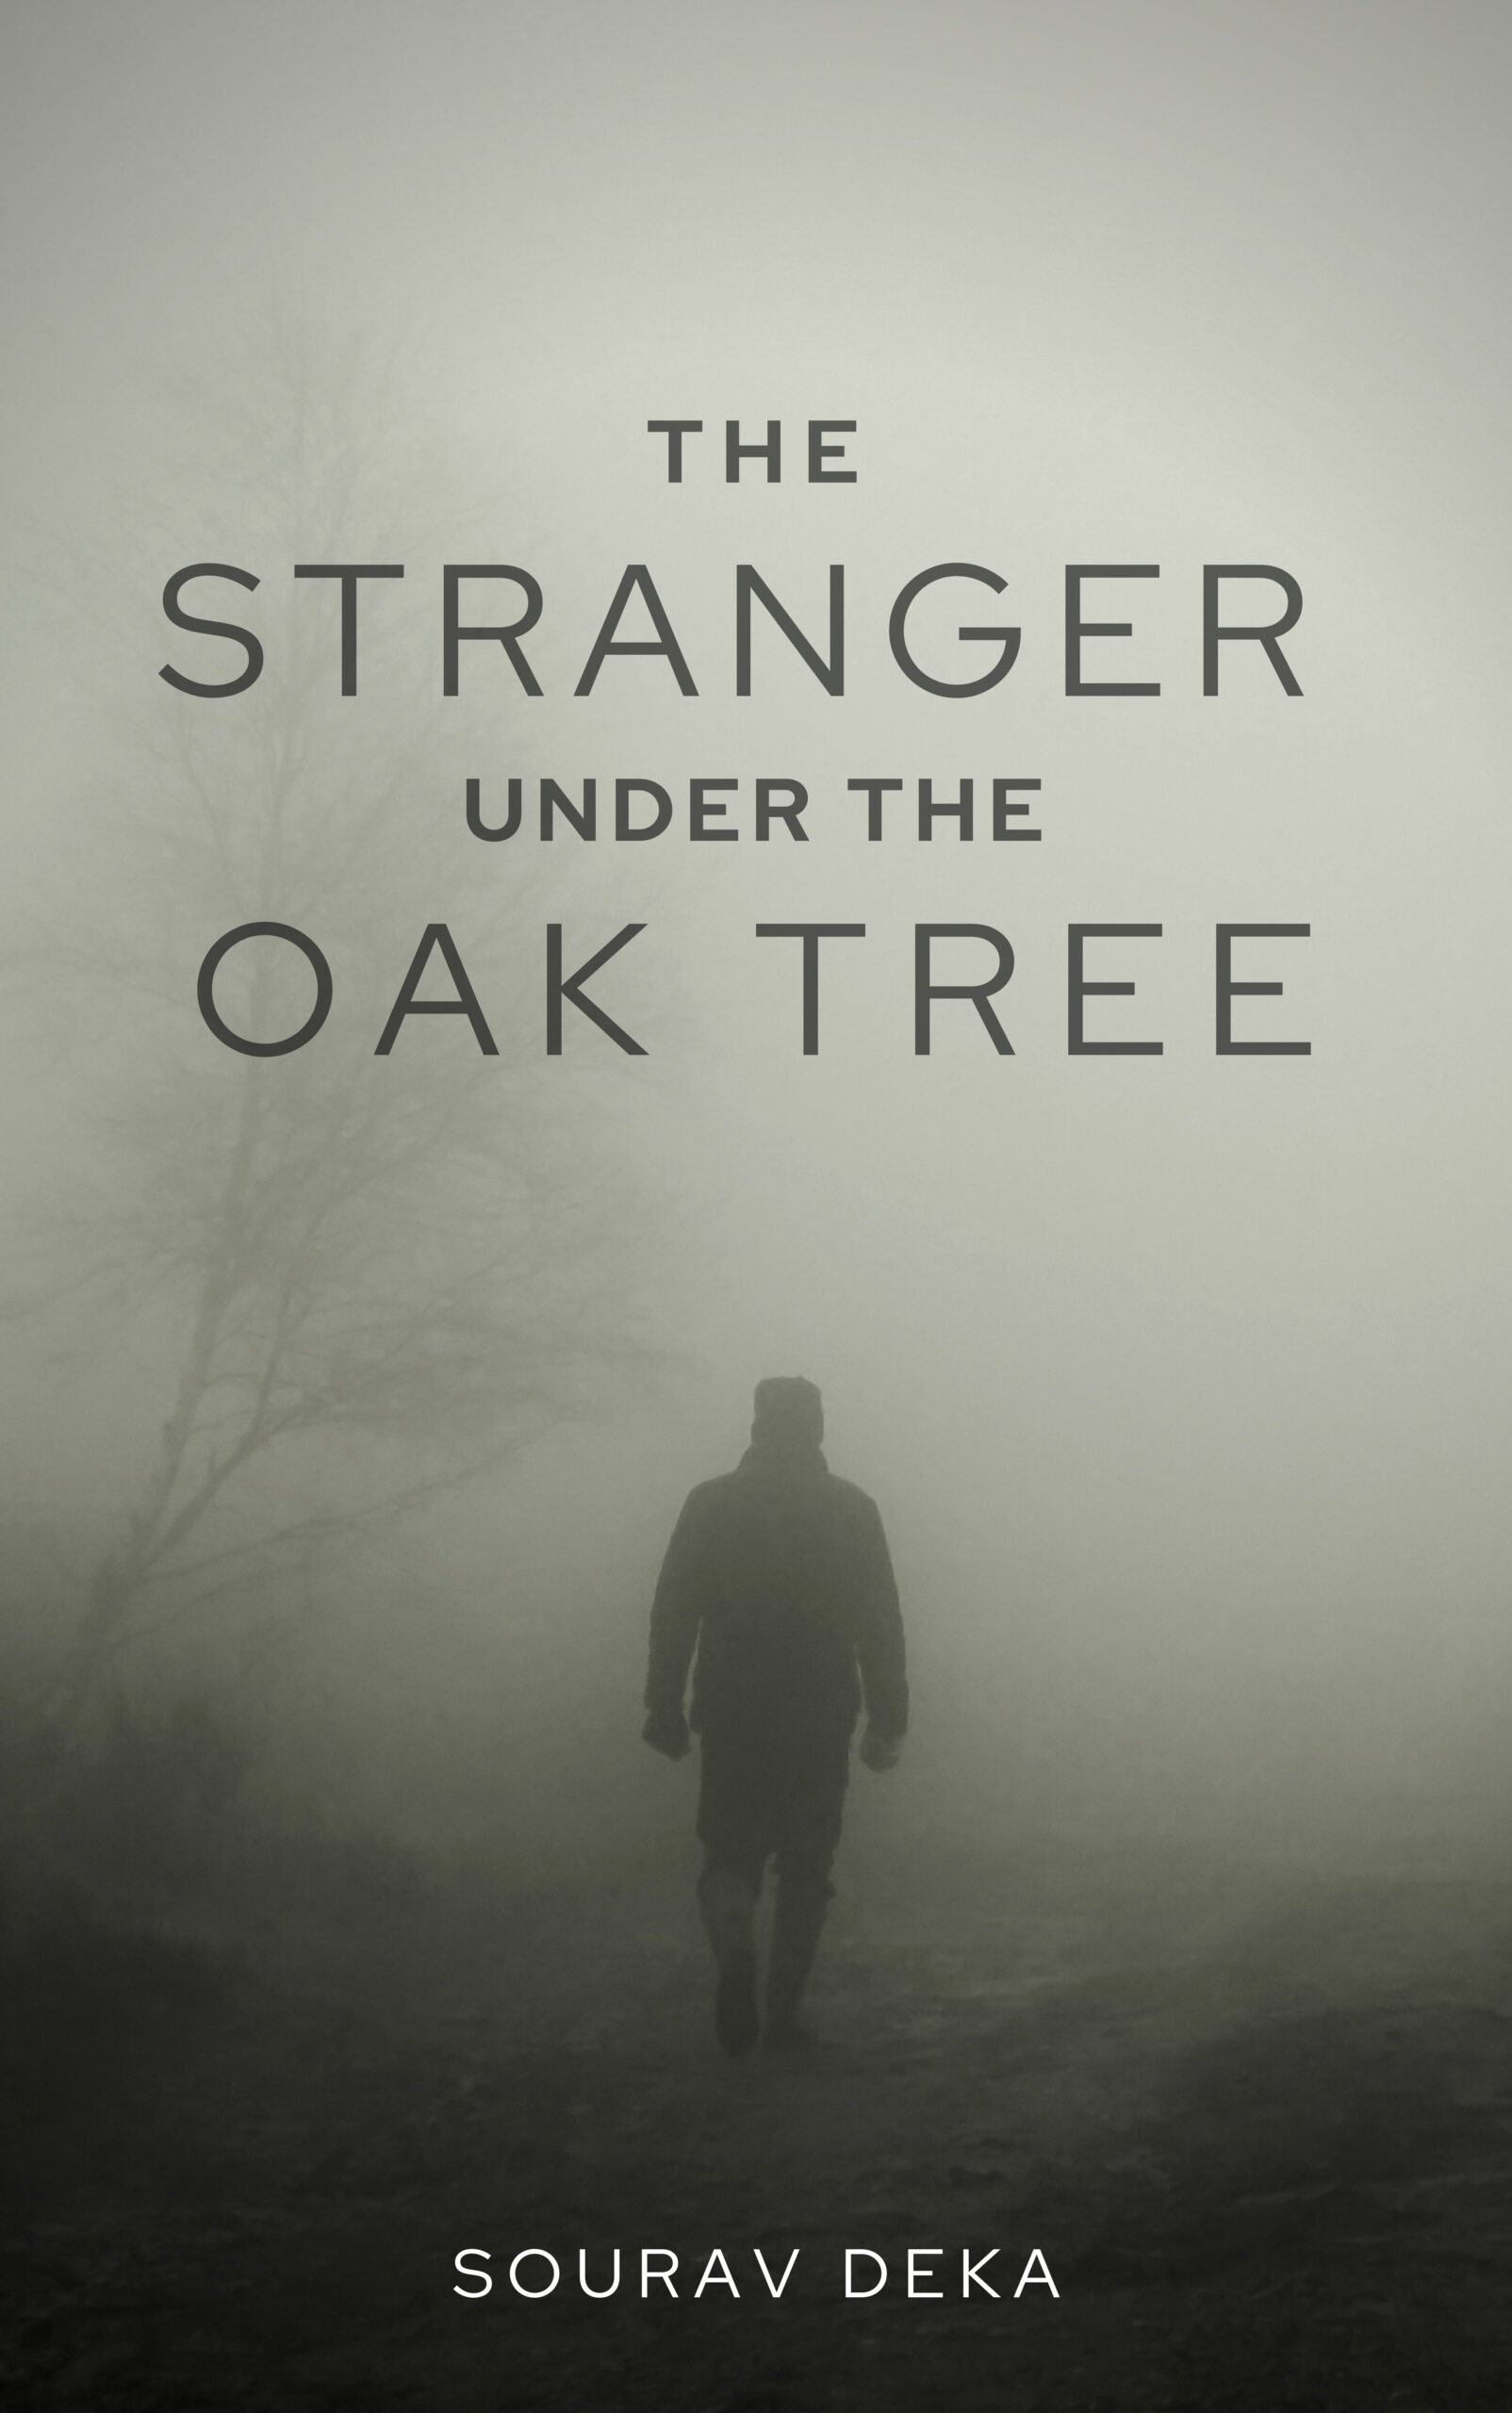 FREE: The stranger under the oak tree by Sourav deka